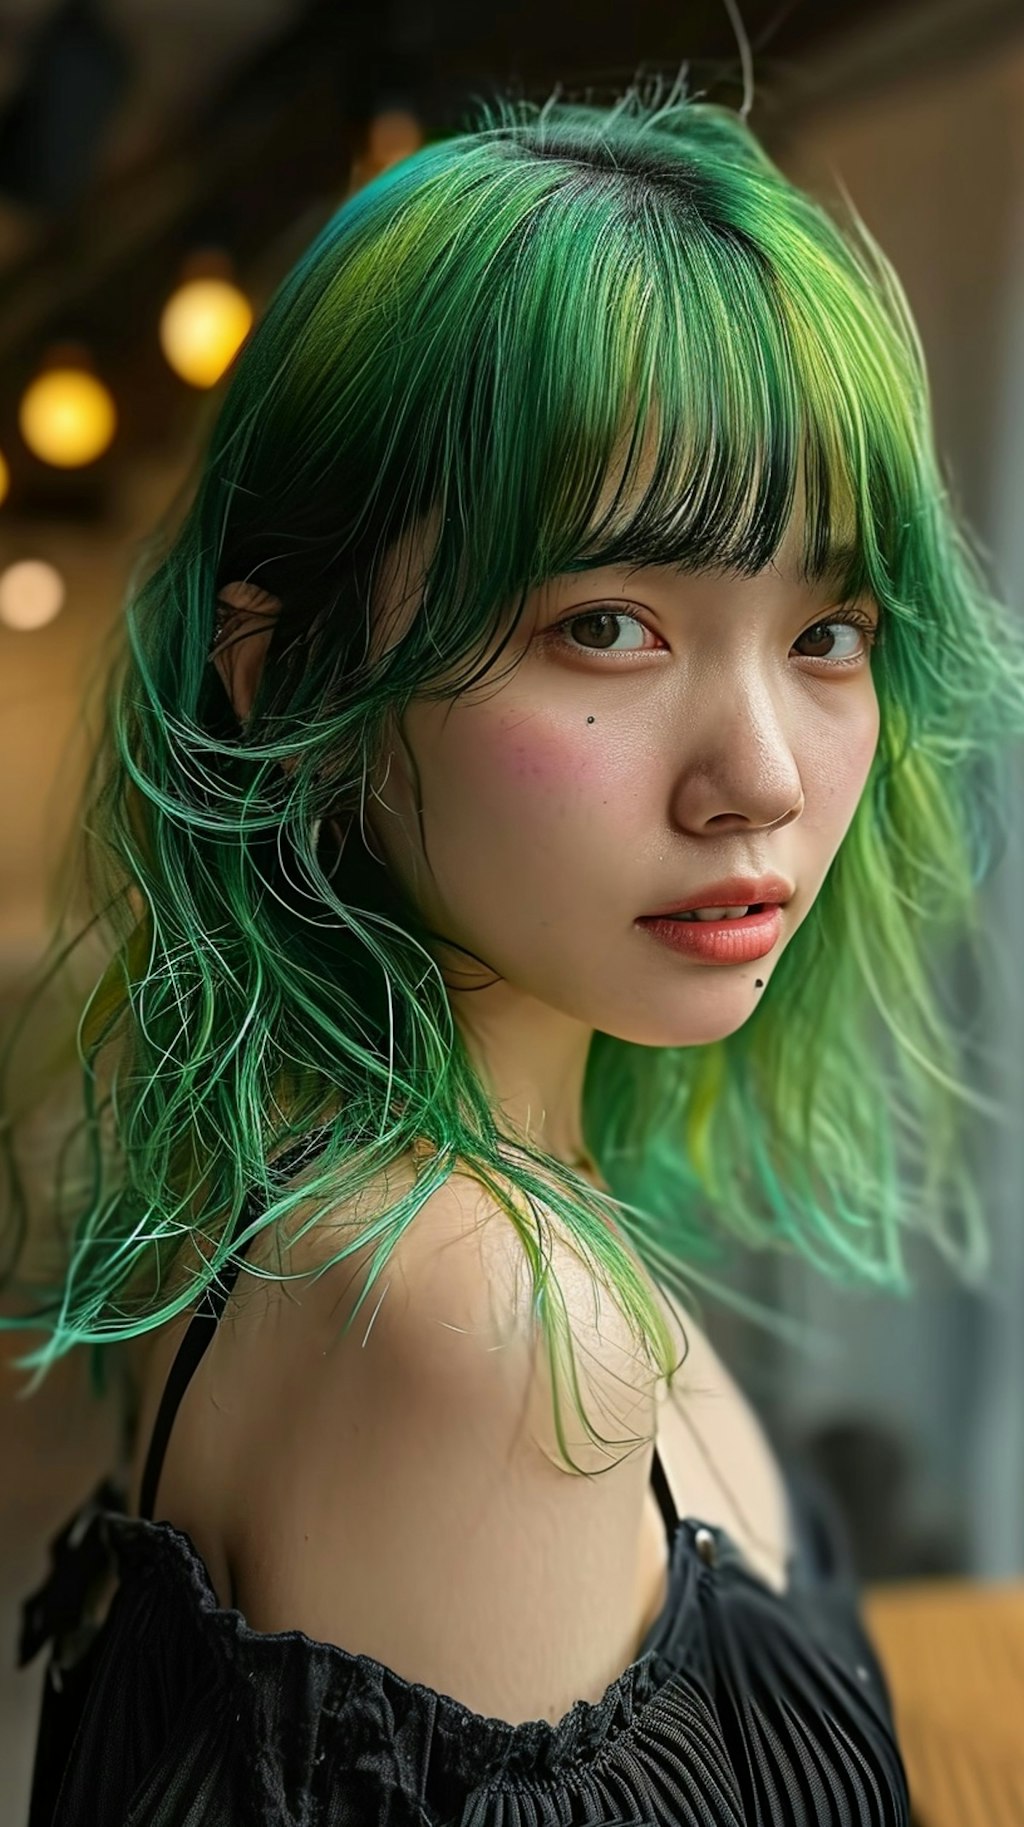 Green hair girl